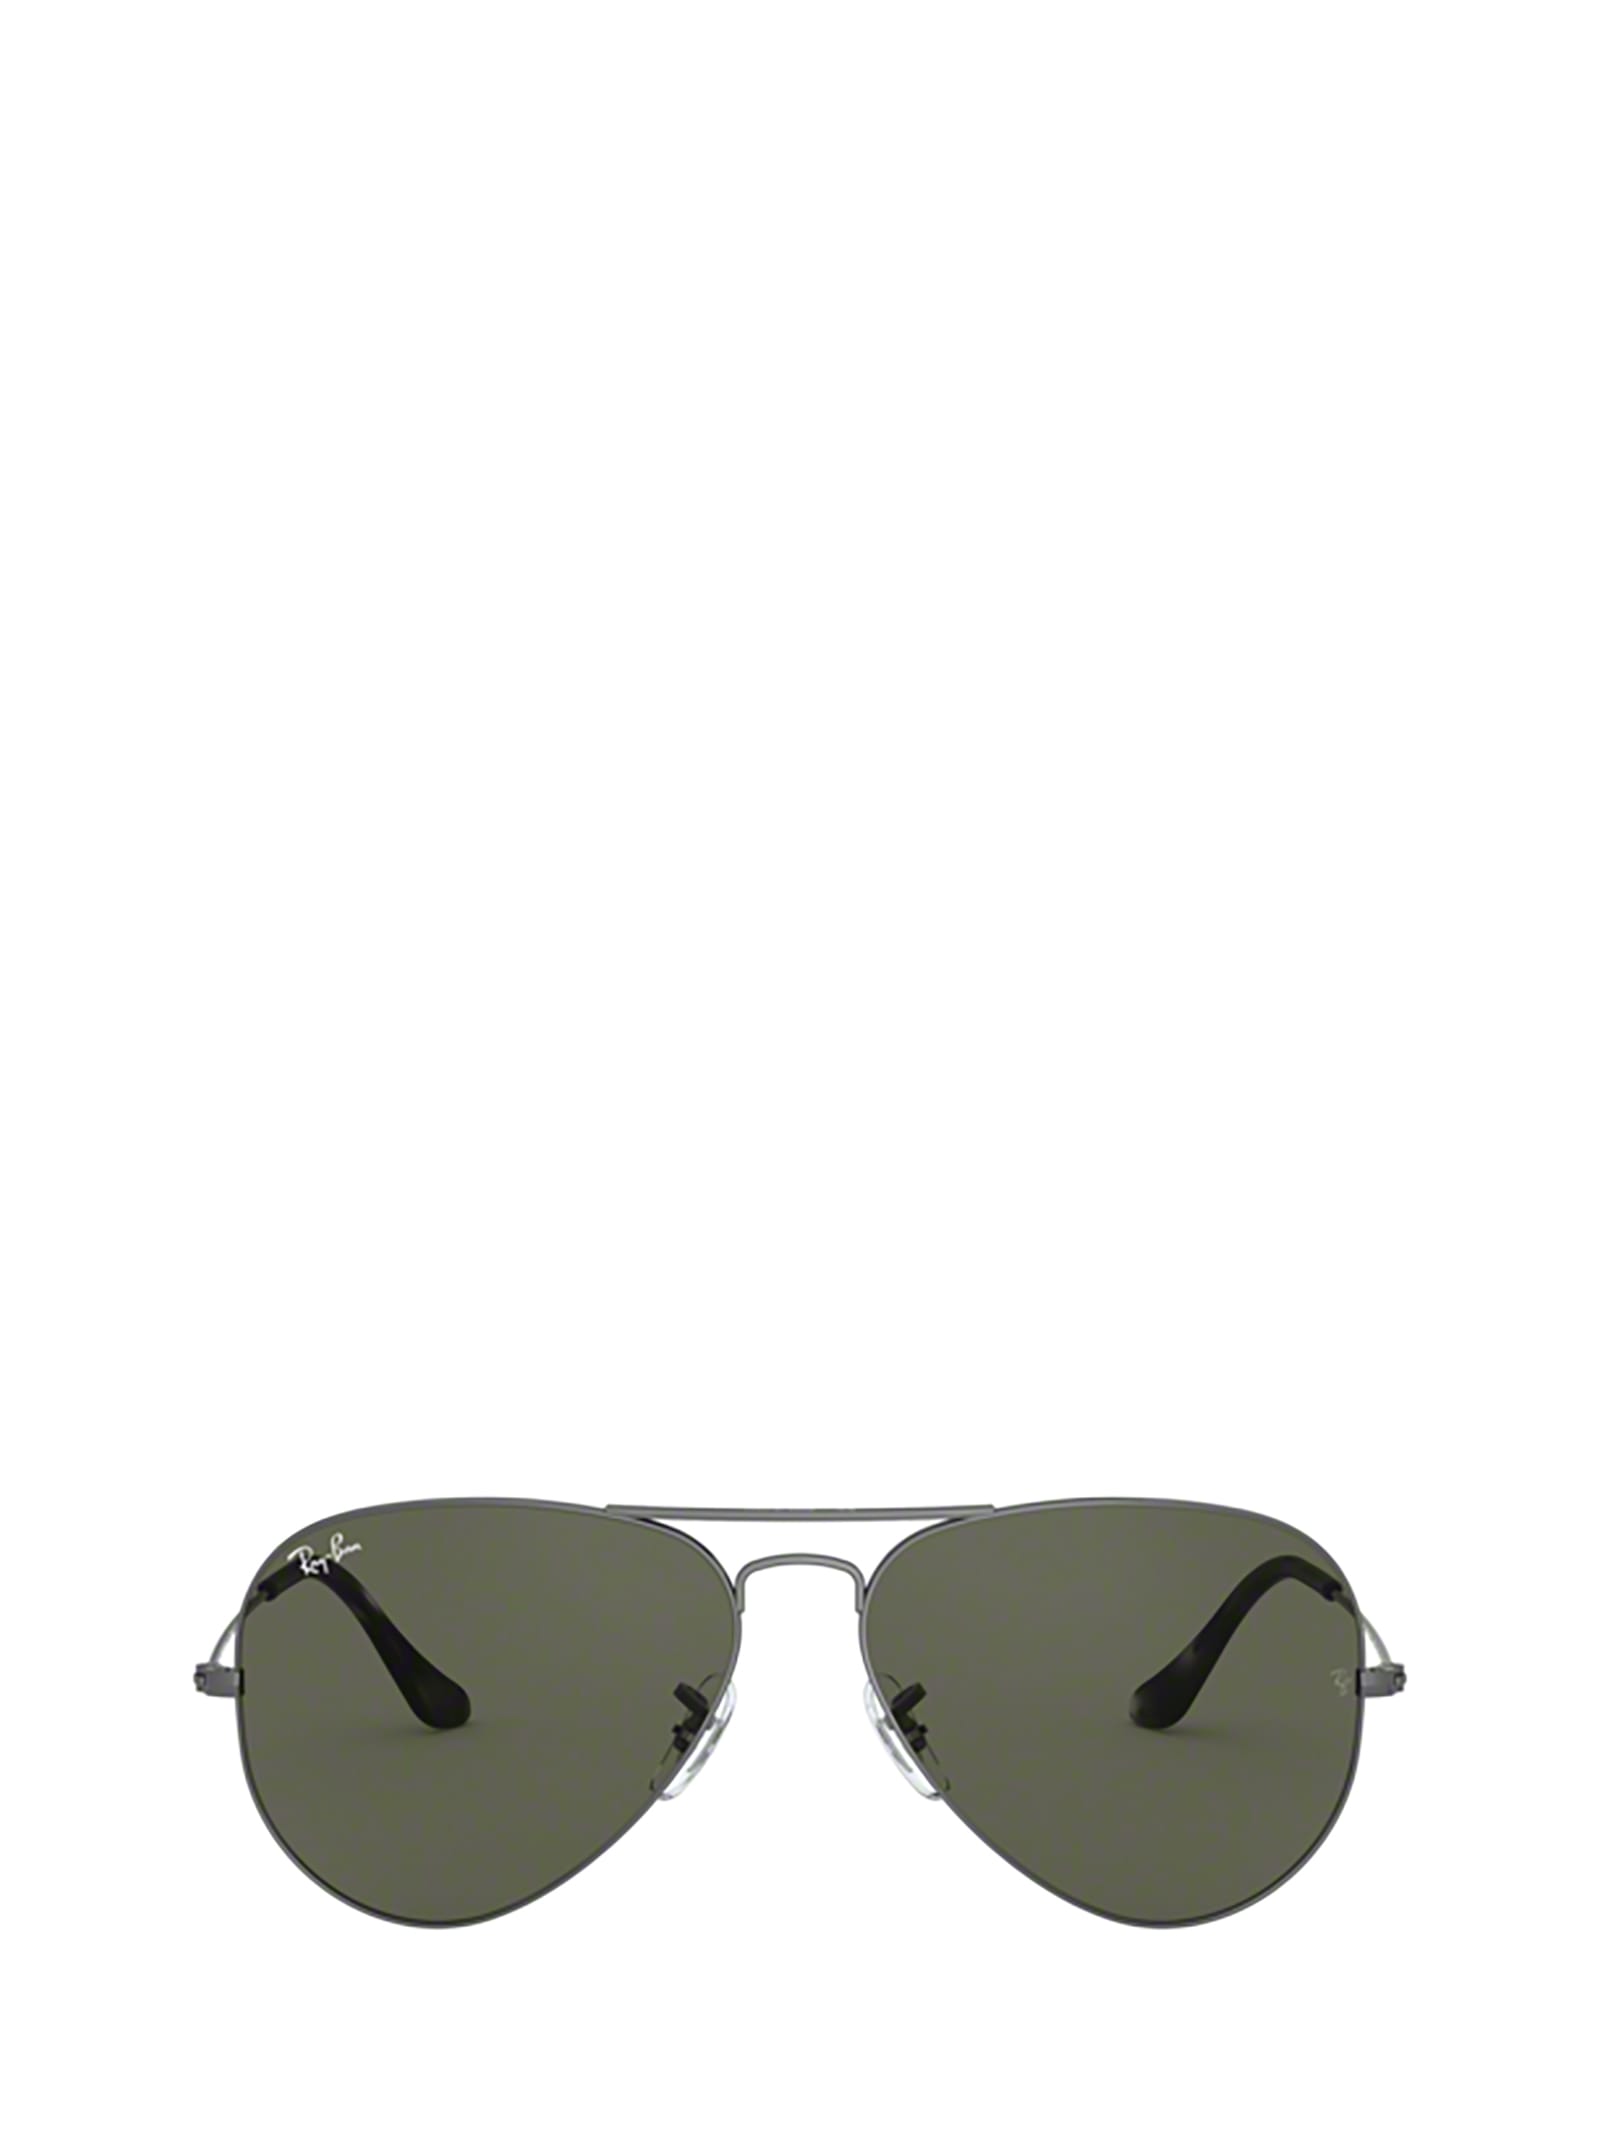 Ray-Ban Ray-ban Rb3025 Sand Transparent Grey Sunglasses